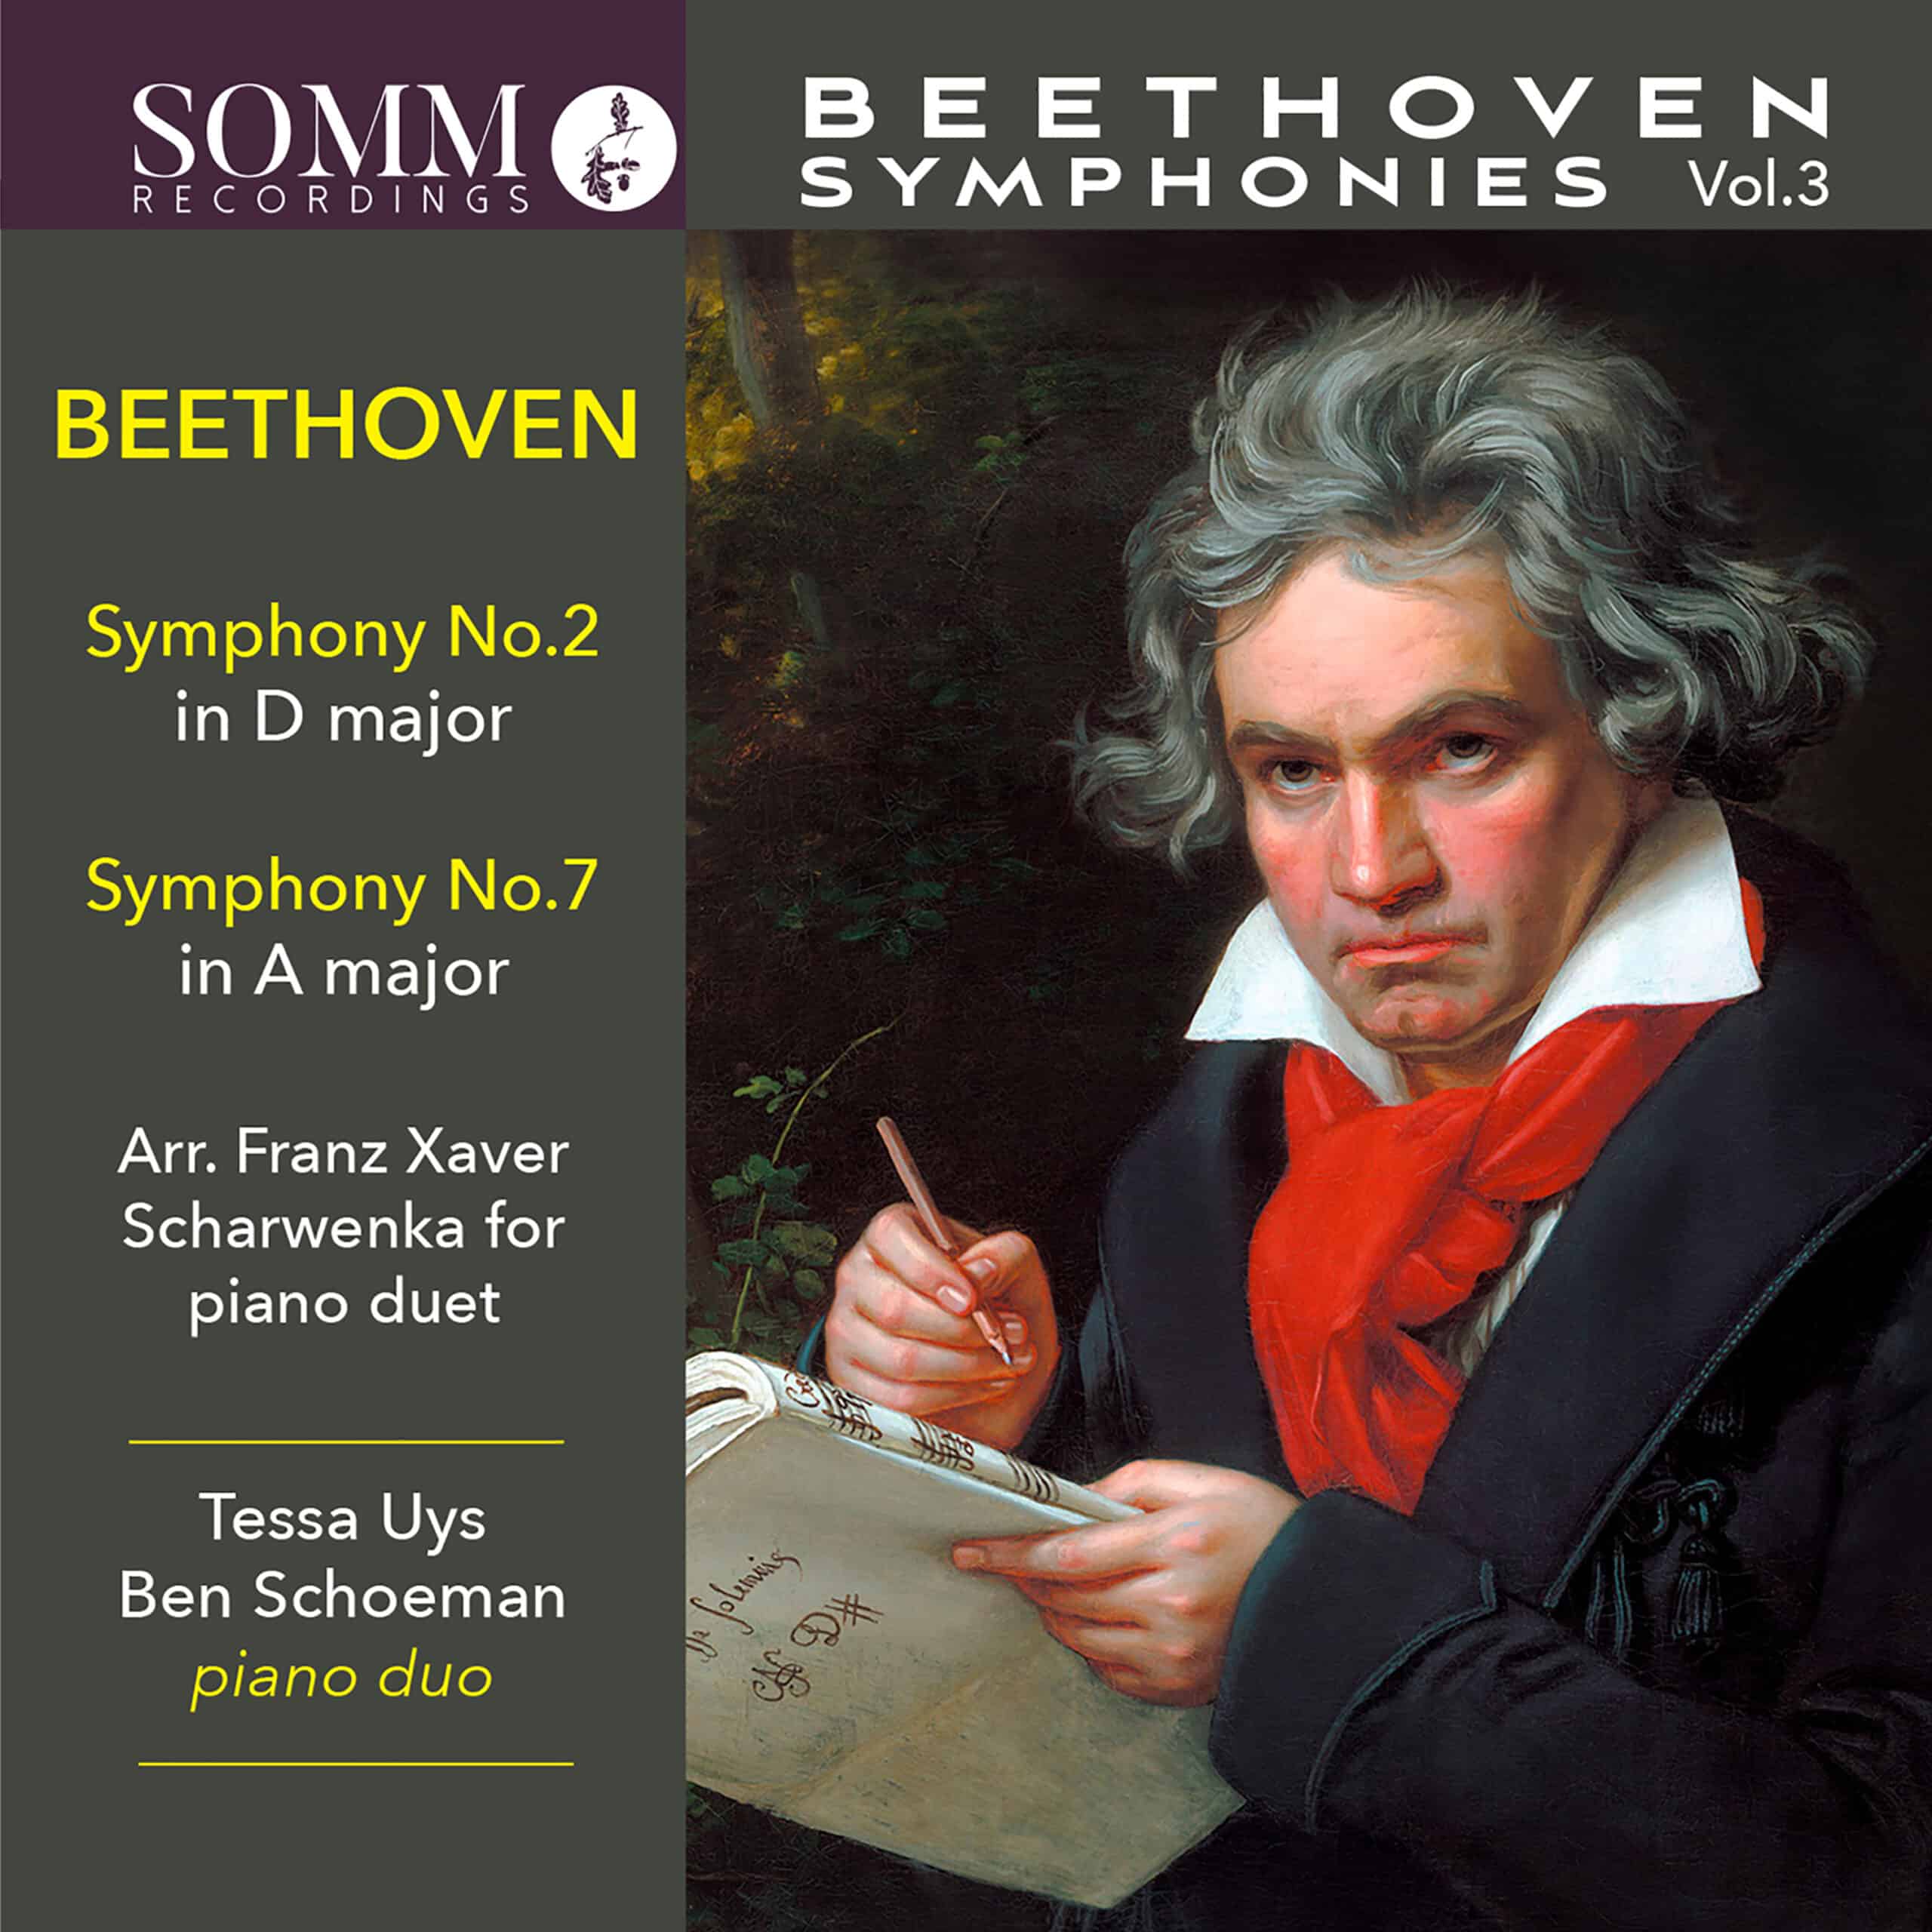 Beethoven Symphonies, Volume 3